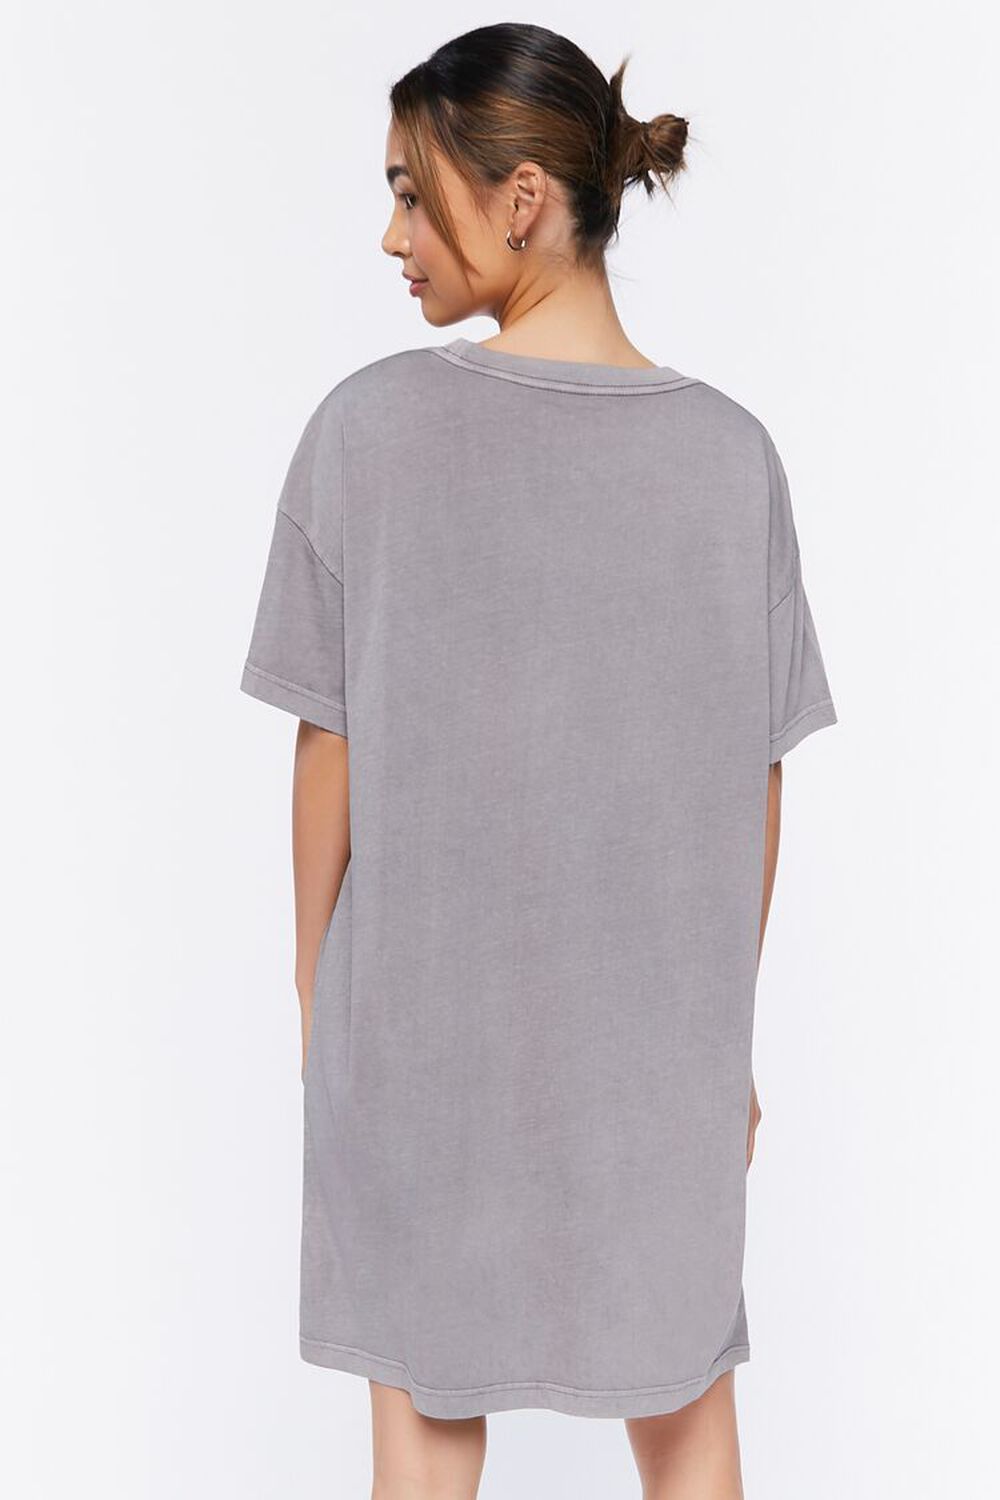 GREY/MULTI Def Leppard Graphic T-Shirt Dress, image 3